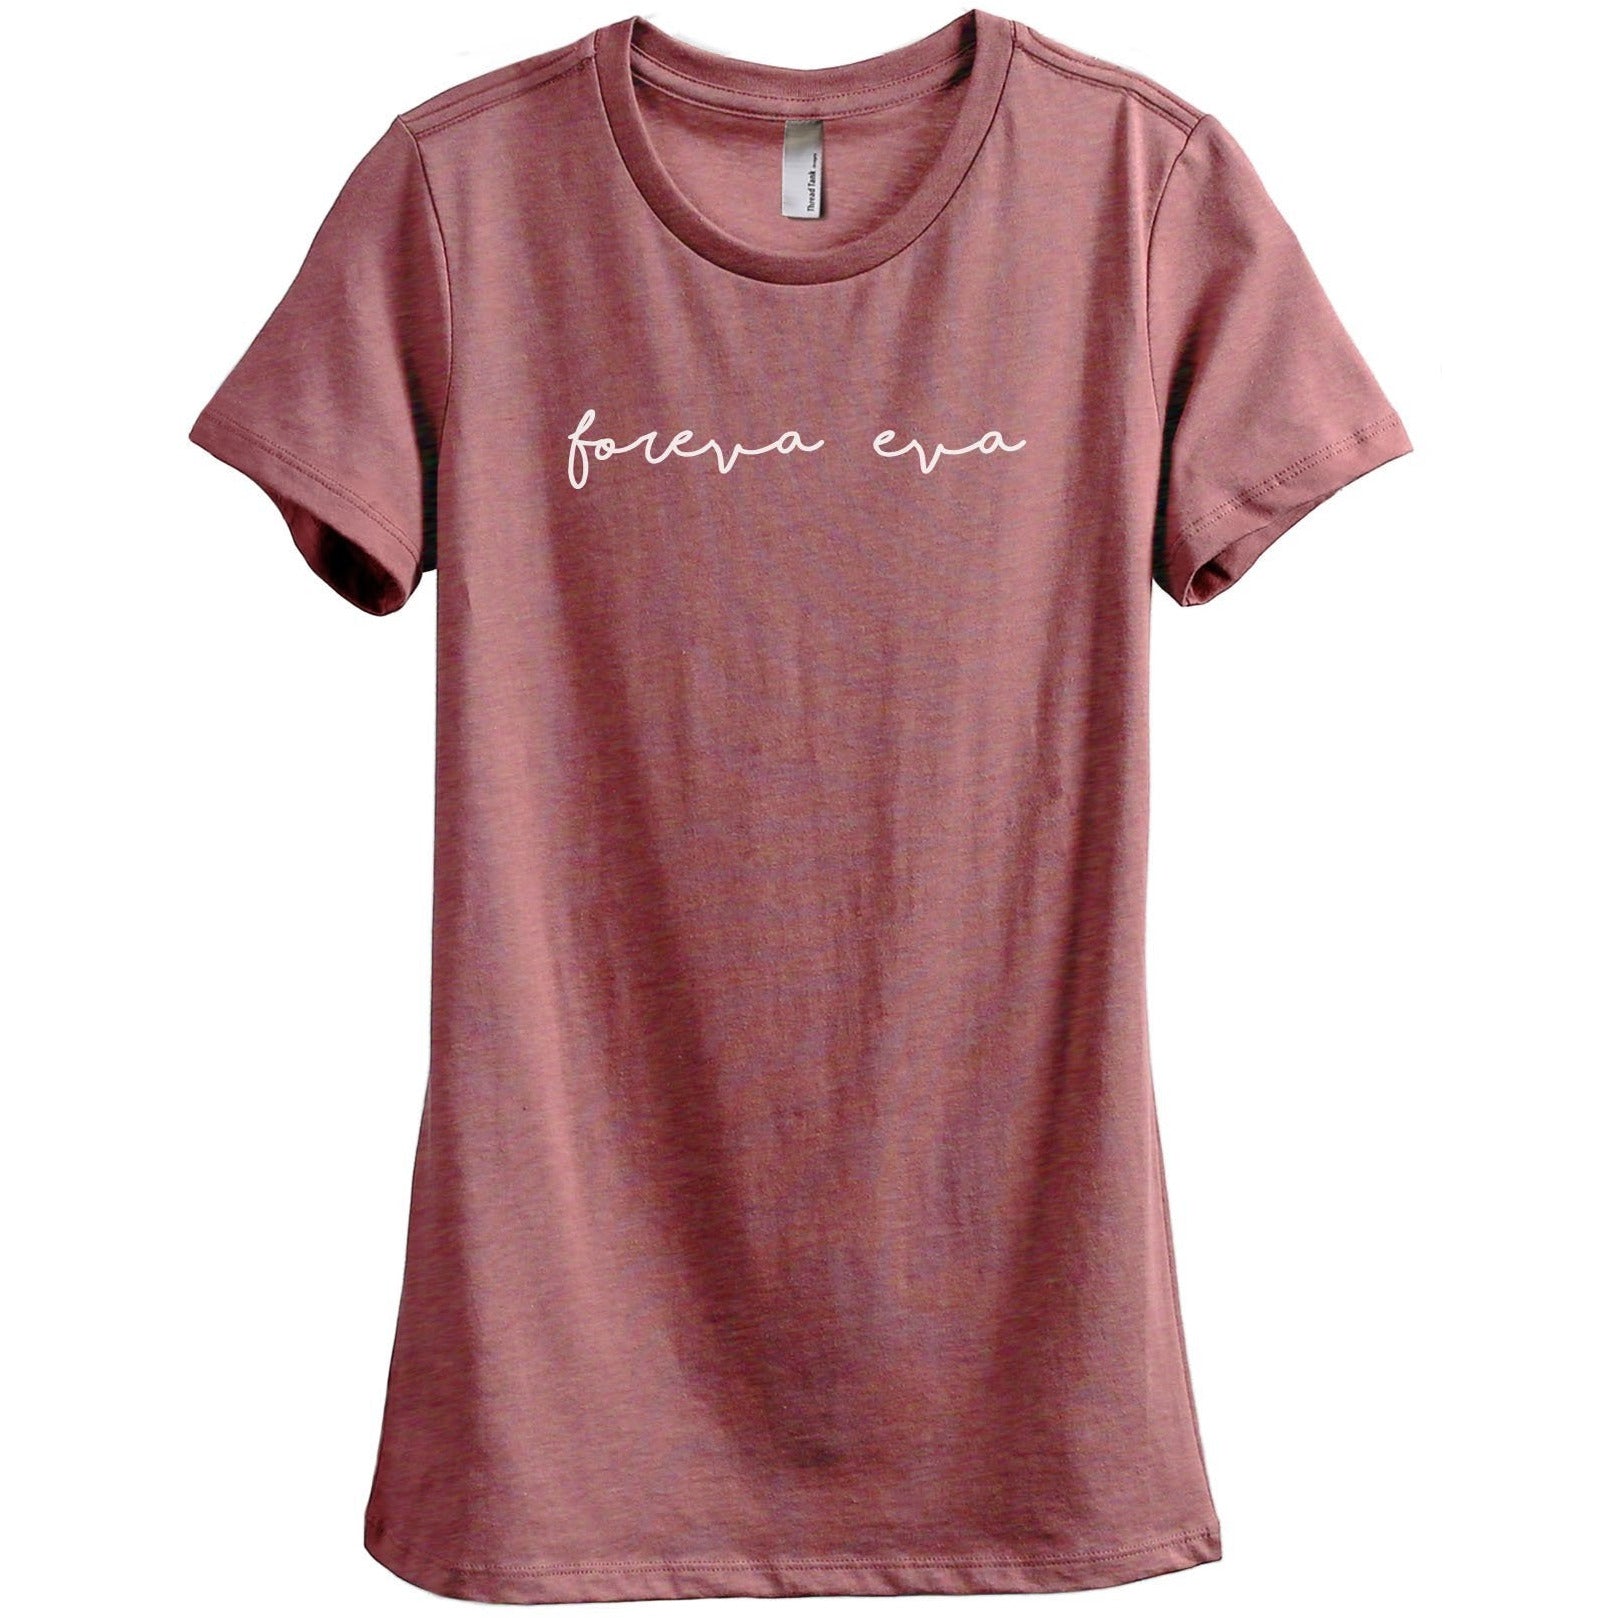 Foreva Eva Women's Relaxed Crewneck T-Shirt Top Tee Heather Rouge